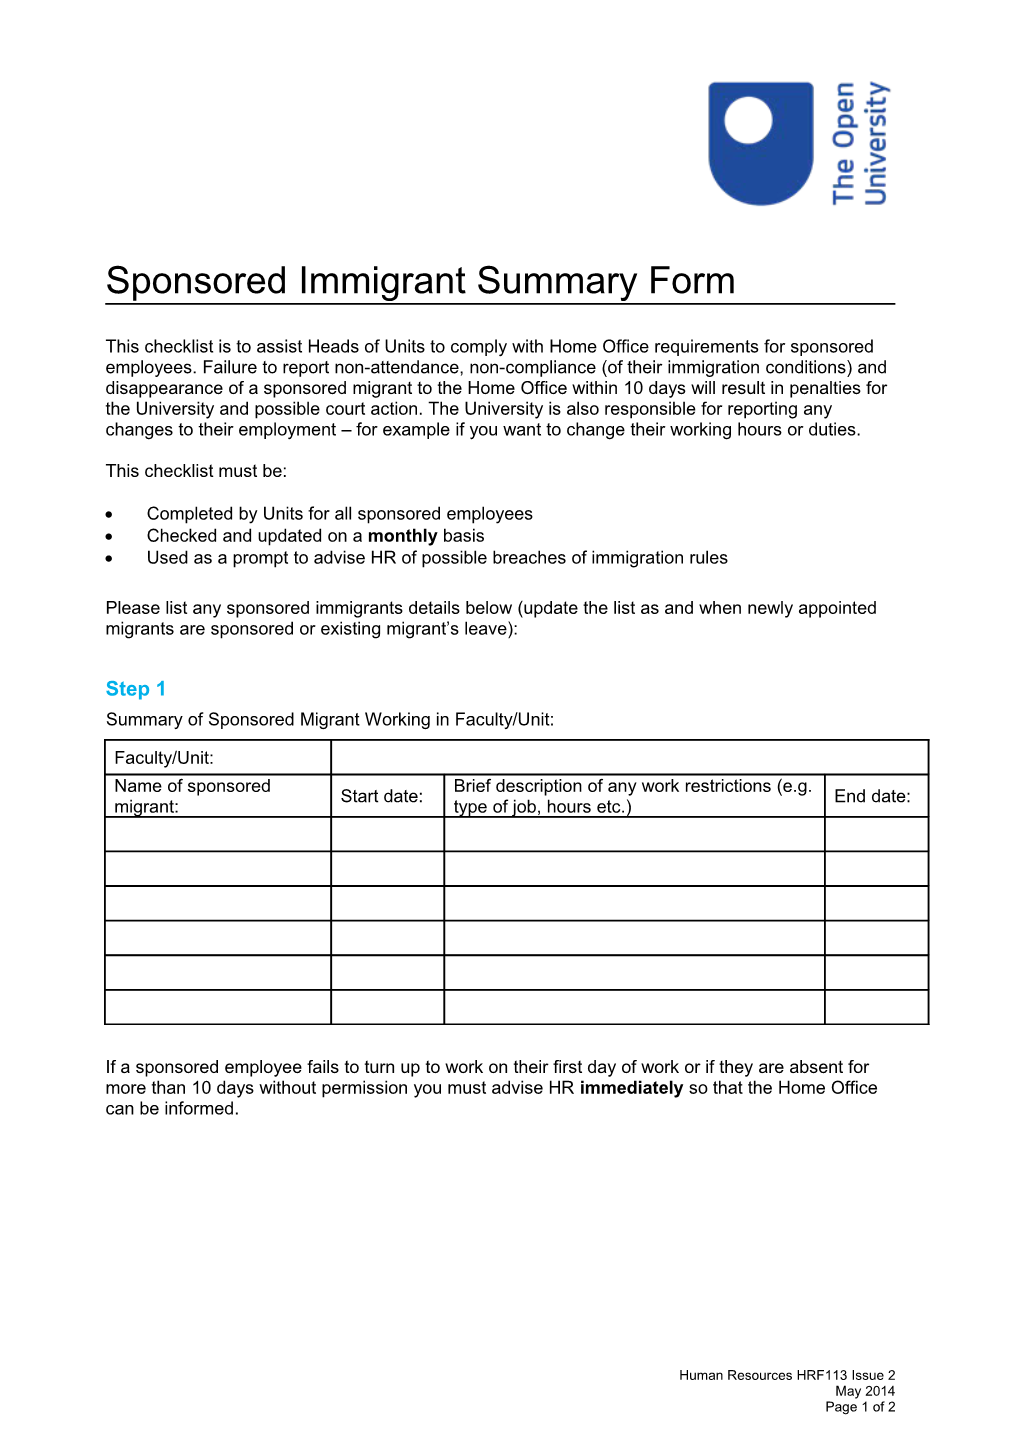 Sponsored Immigrant Chcecklis Form HRF113